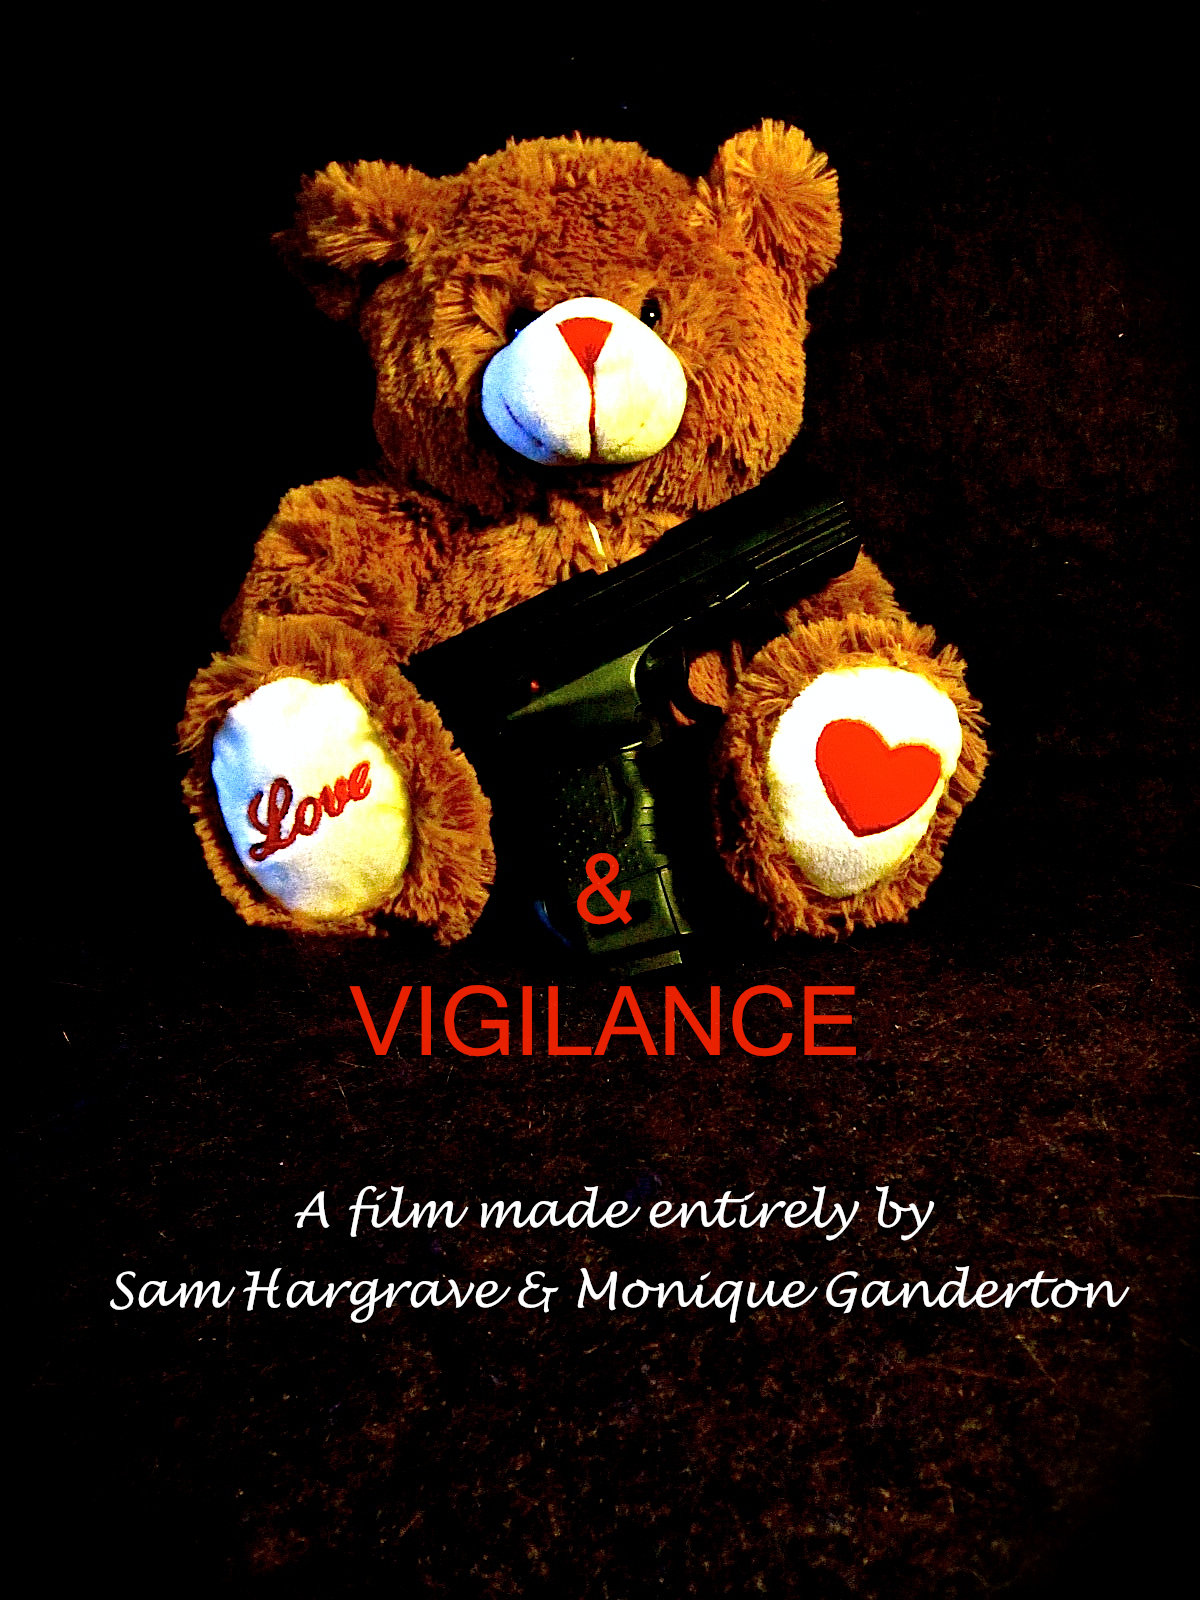 Sam Hargrave and Monique Ganderton in Love and Vigilance (2012)